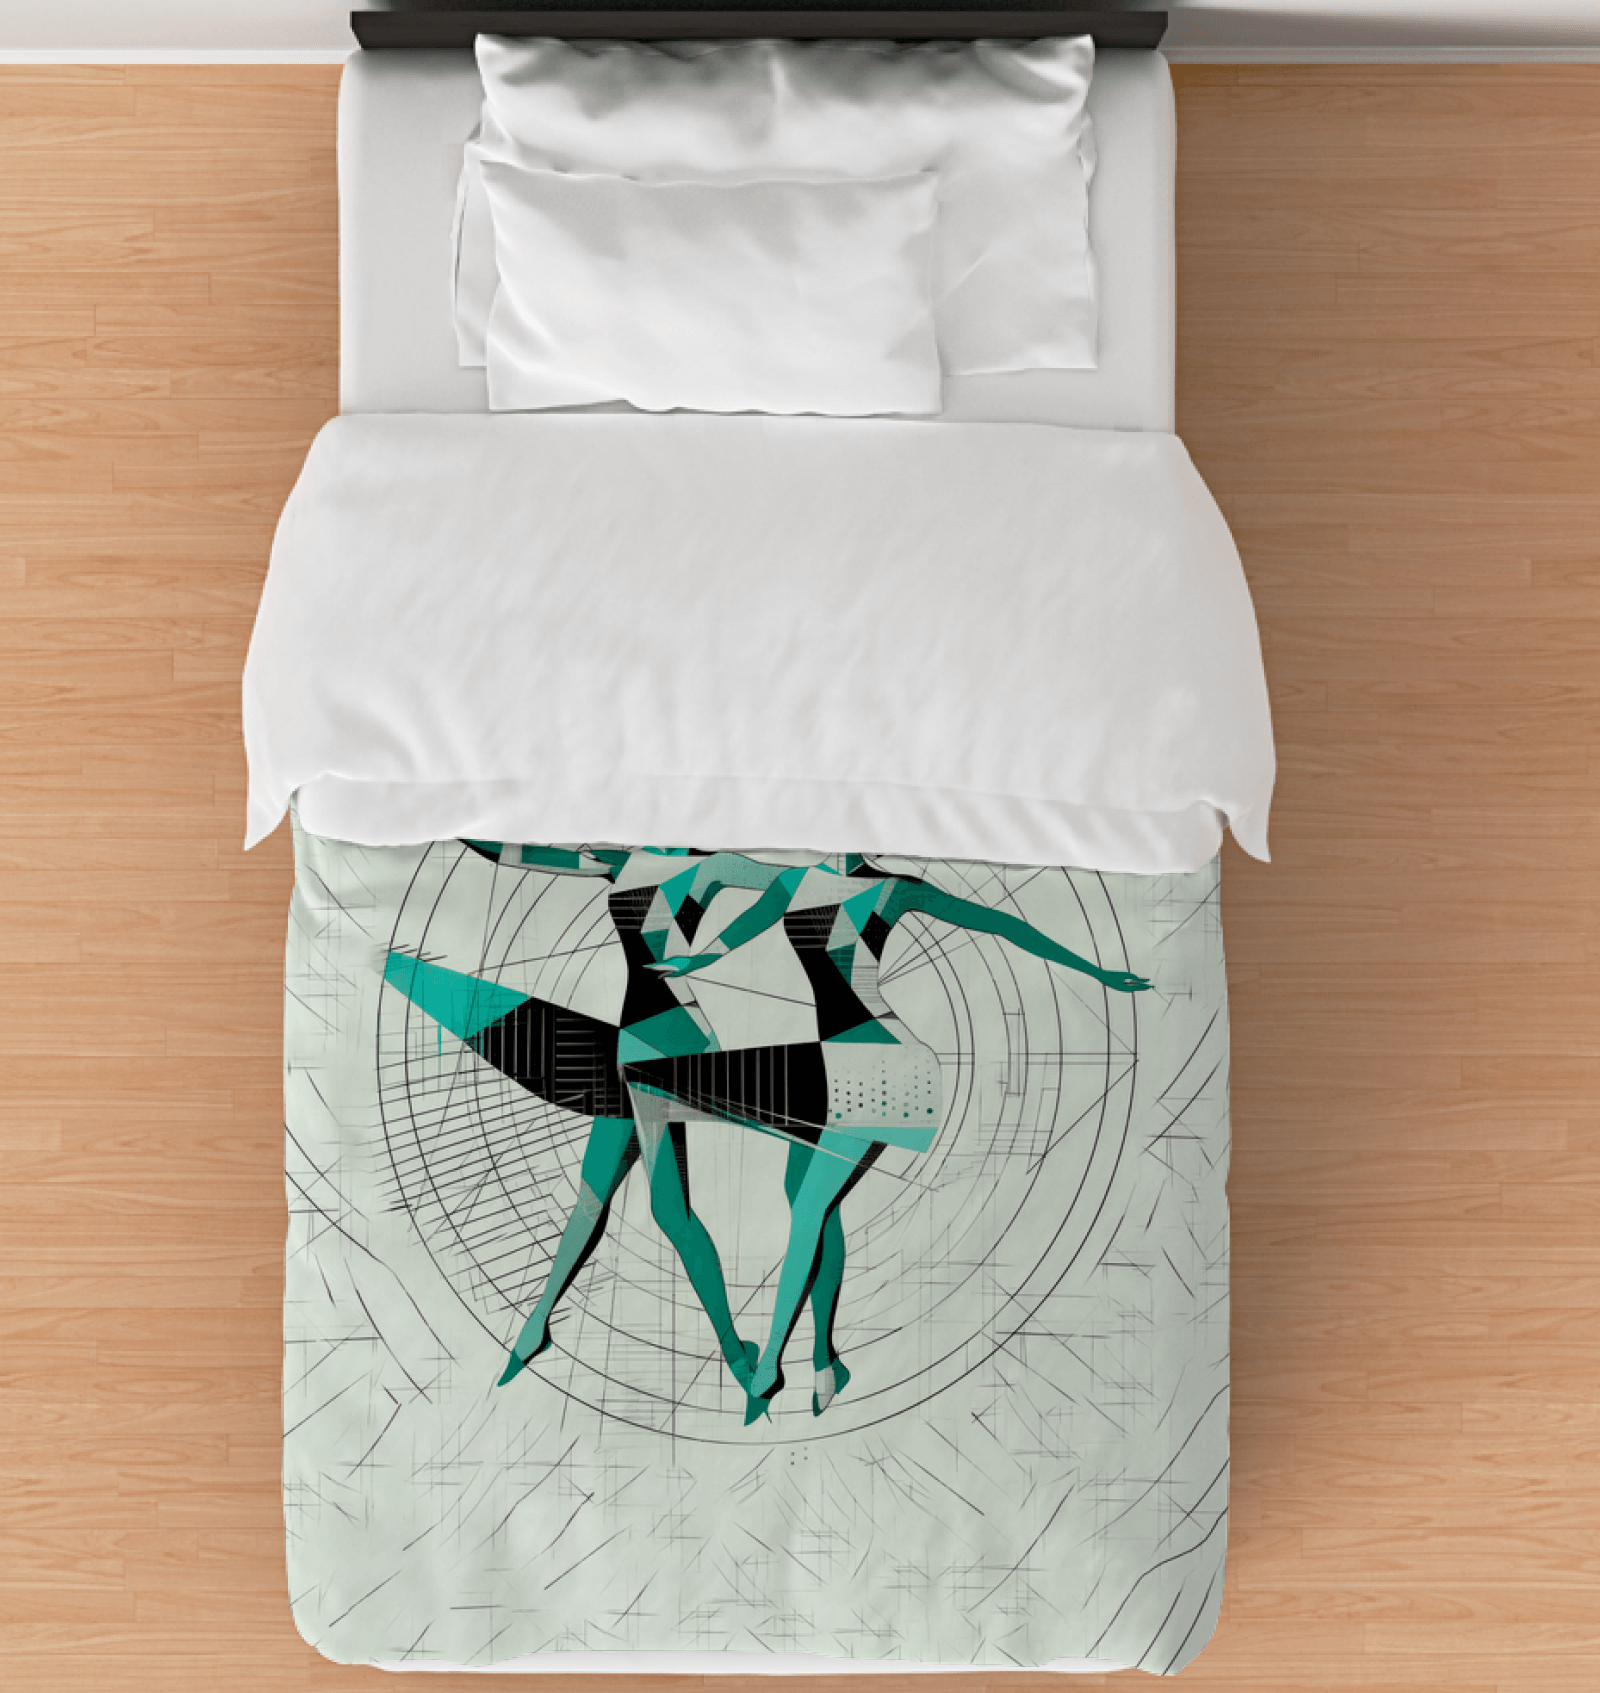 Artistic women's dance expression design on a duvet cover, enhancing bedroom decor.